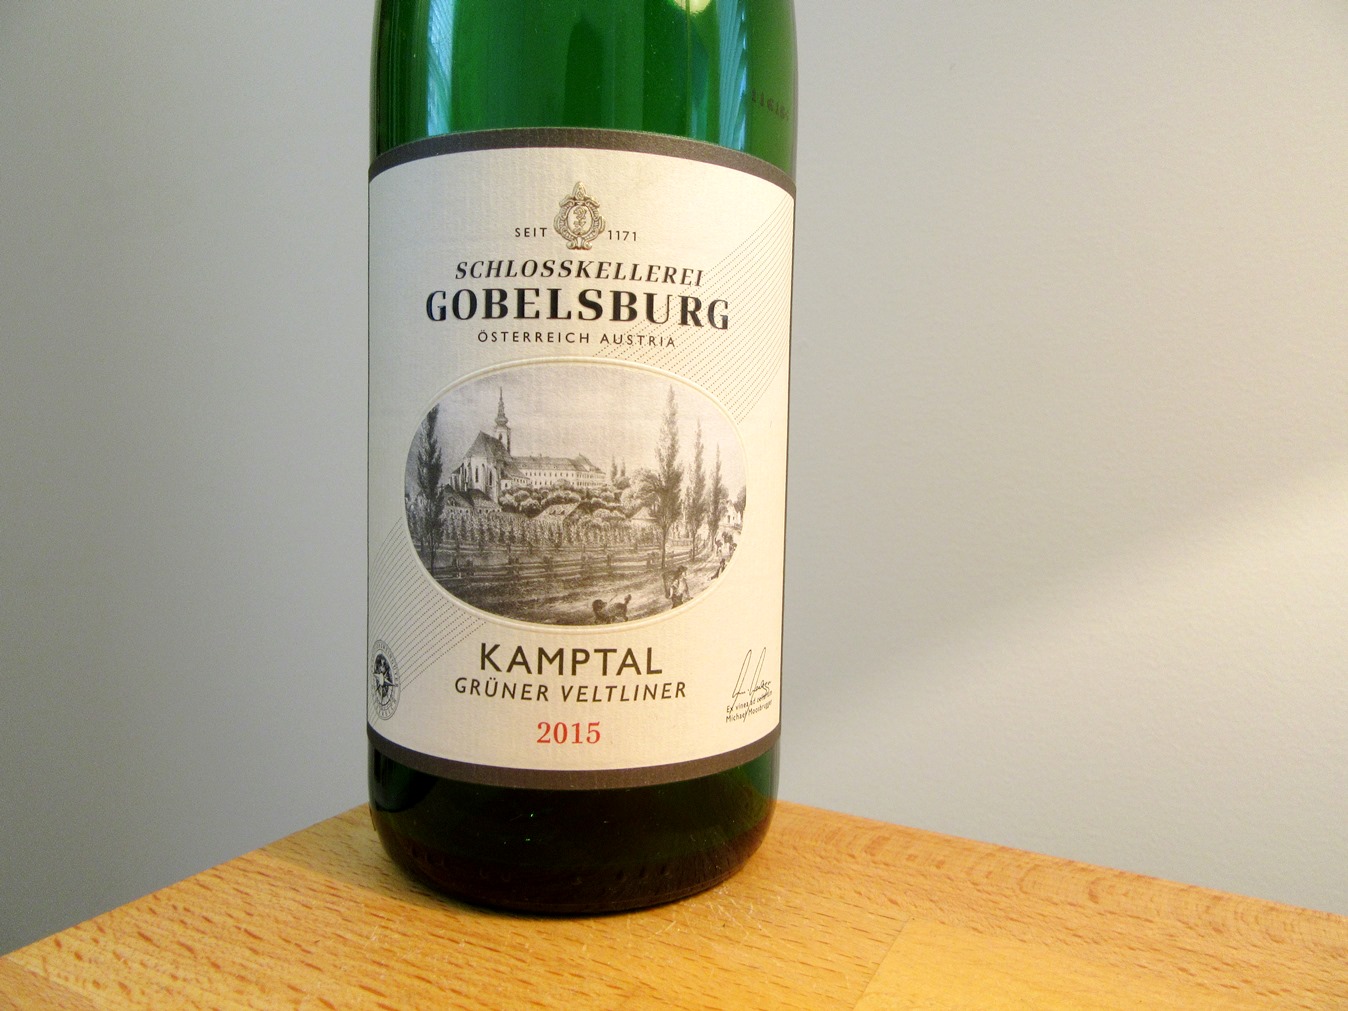 Schlosskellerei Gobelsburg, Grüner Veltliner 2015, Kamptal, Austria, Wine Casual